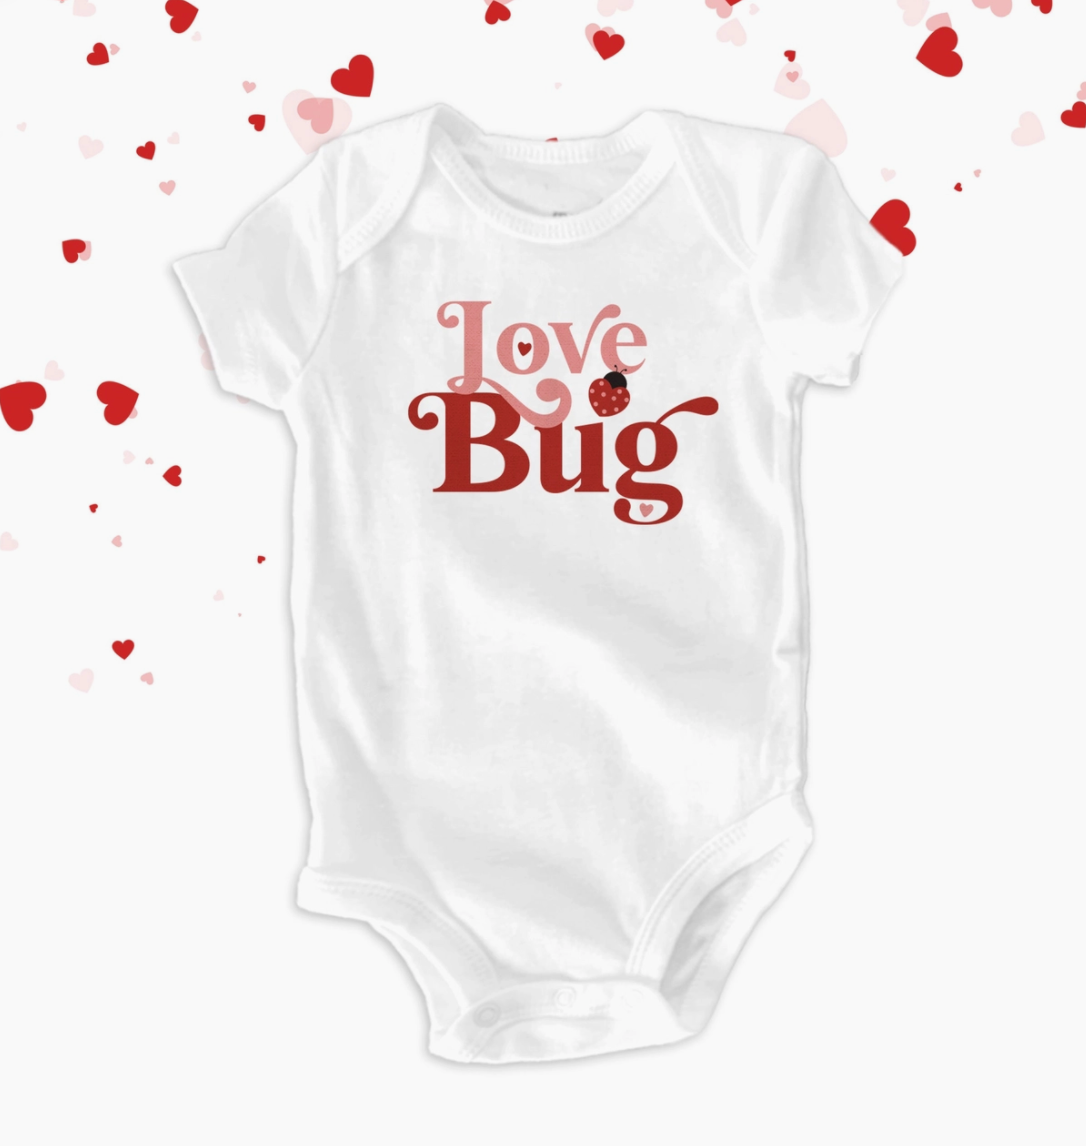 Love Bug Valentine's Day baby bodysuit